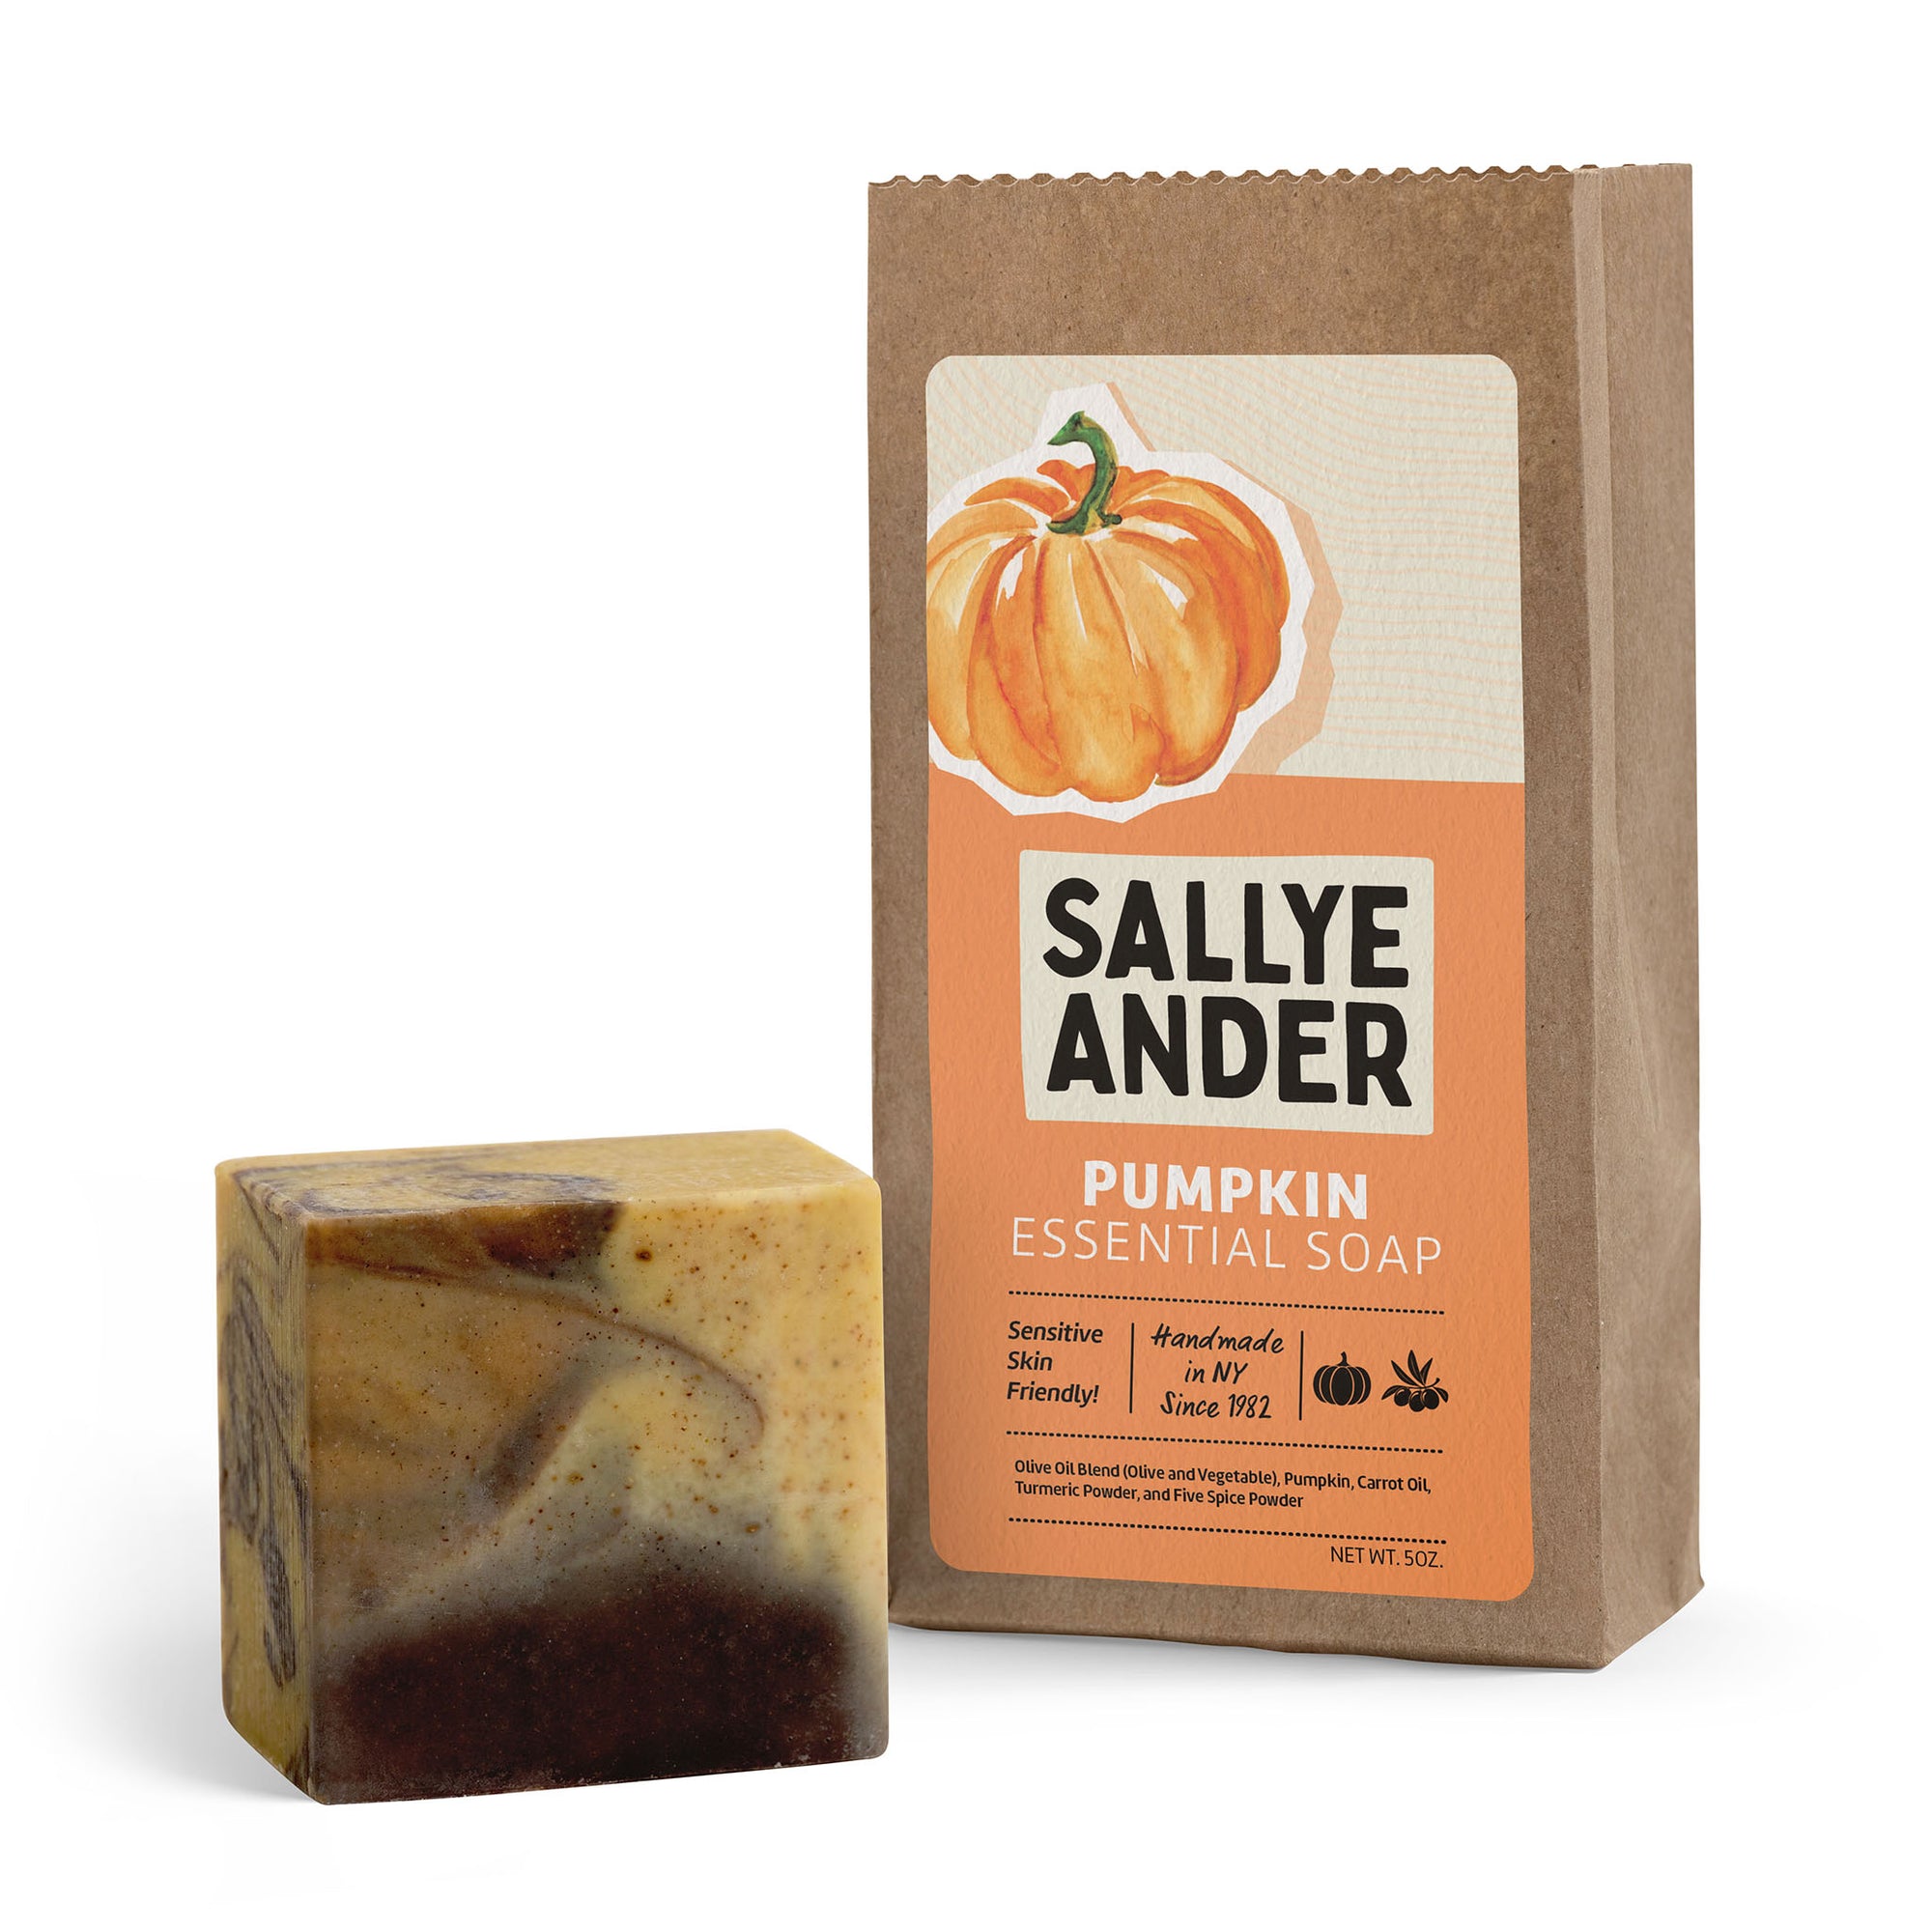 Pumpkin Essential Soap